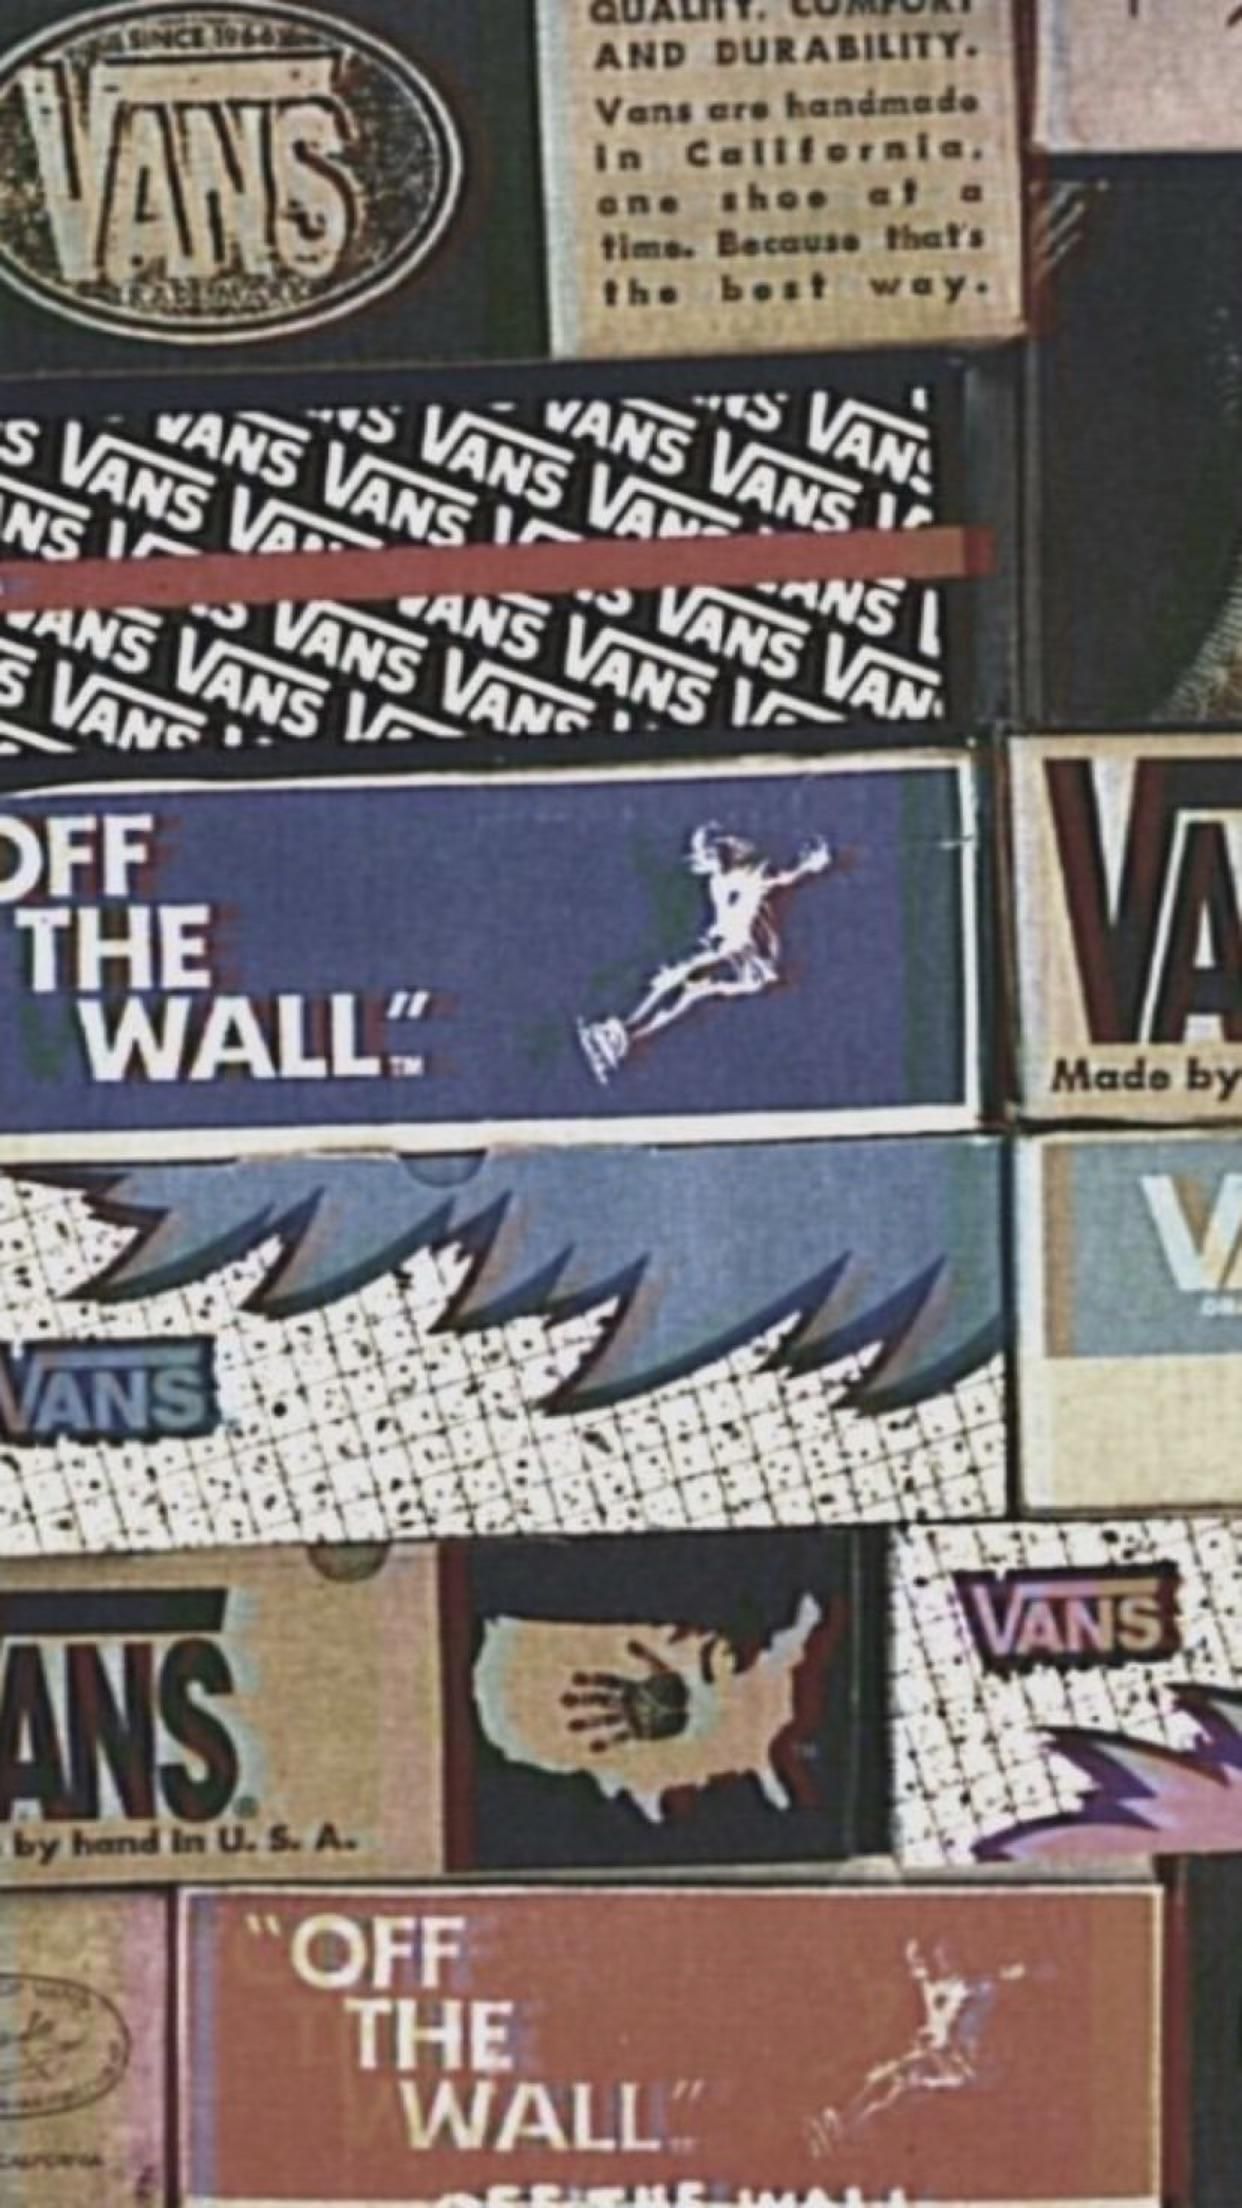 Vans off the wall - 90s